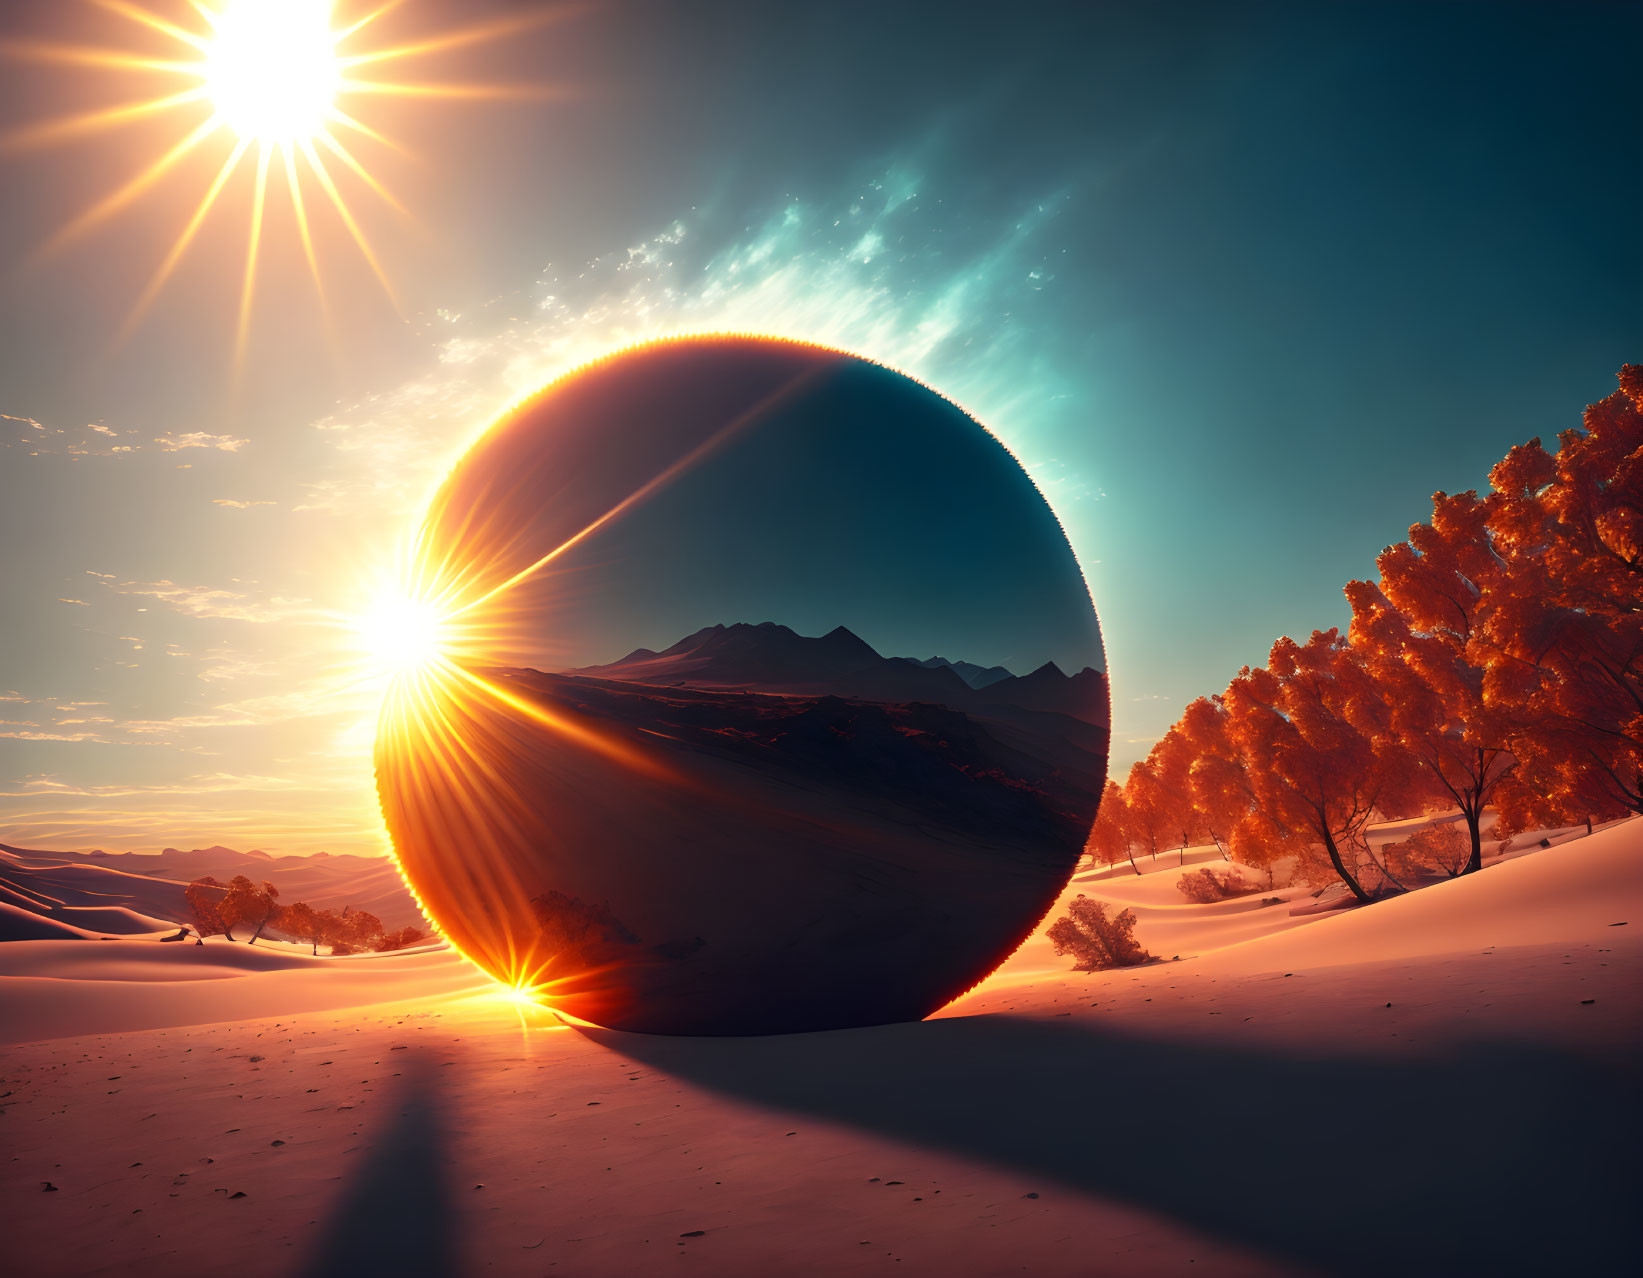 Sunlit desert landscape with glossy sphere reflecting scenery